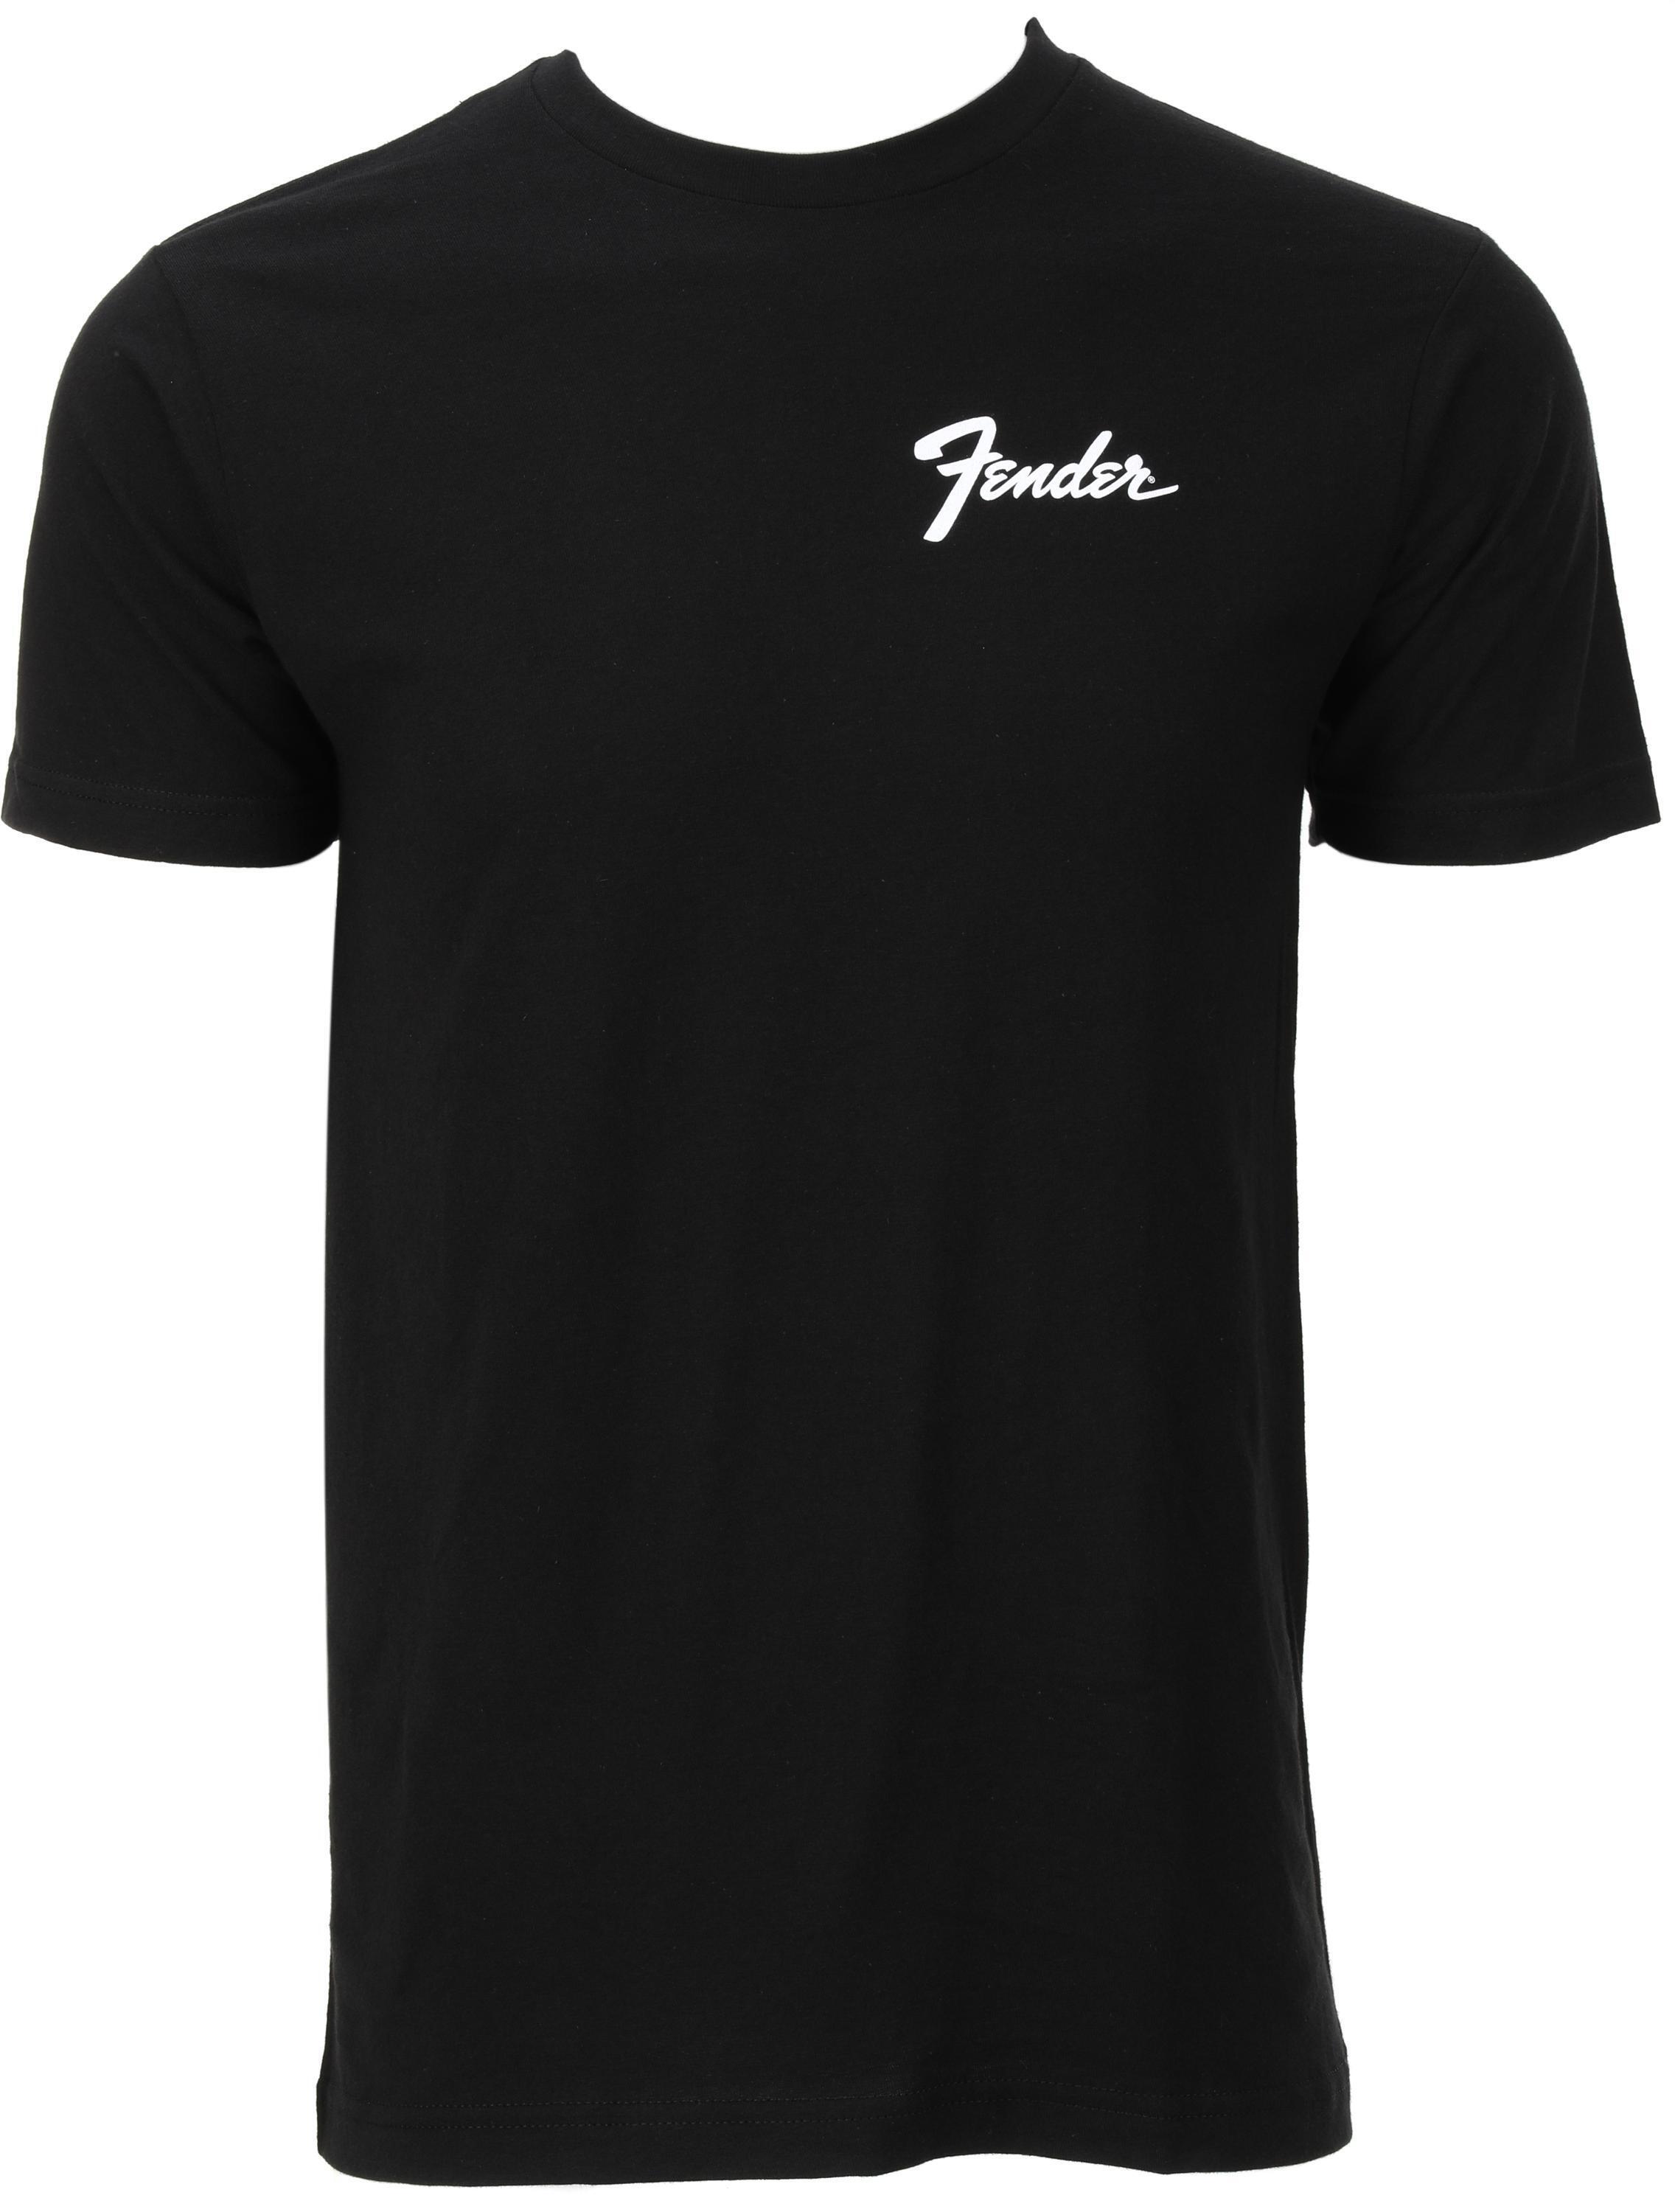 Fender Transition Logo T-shirt - XX-Large, Black